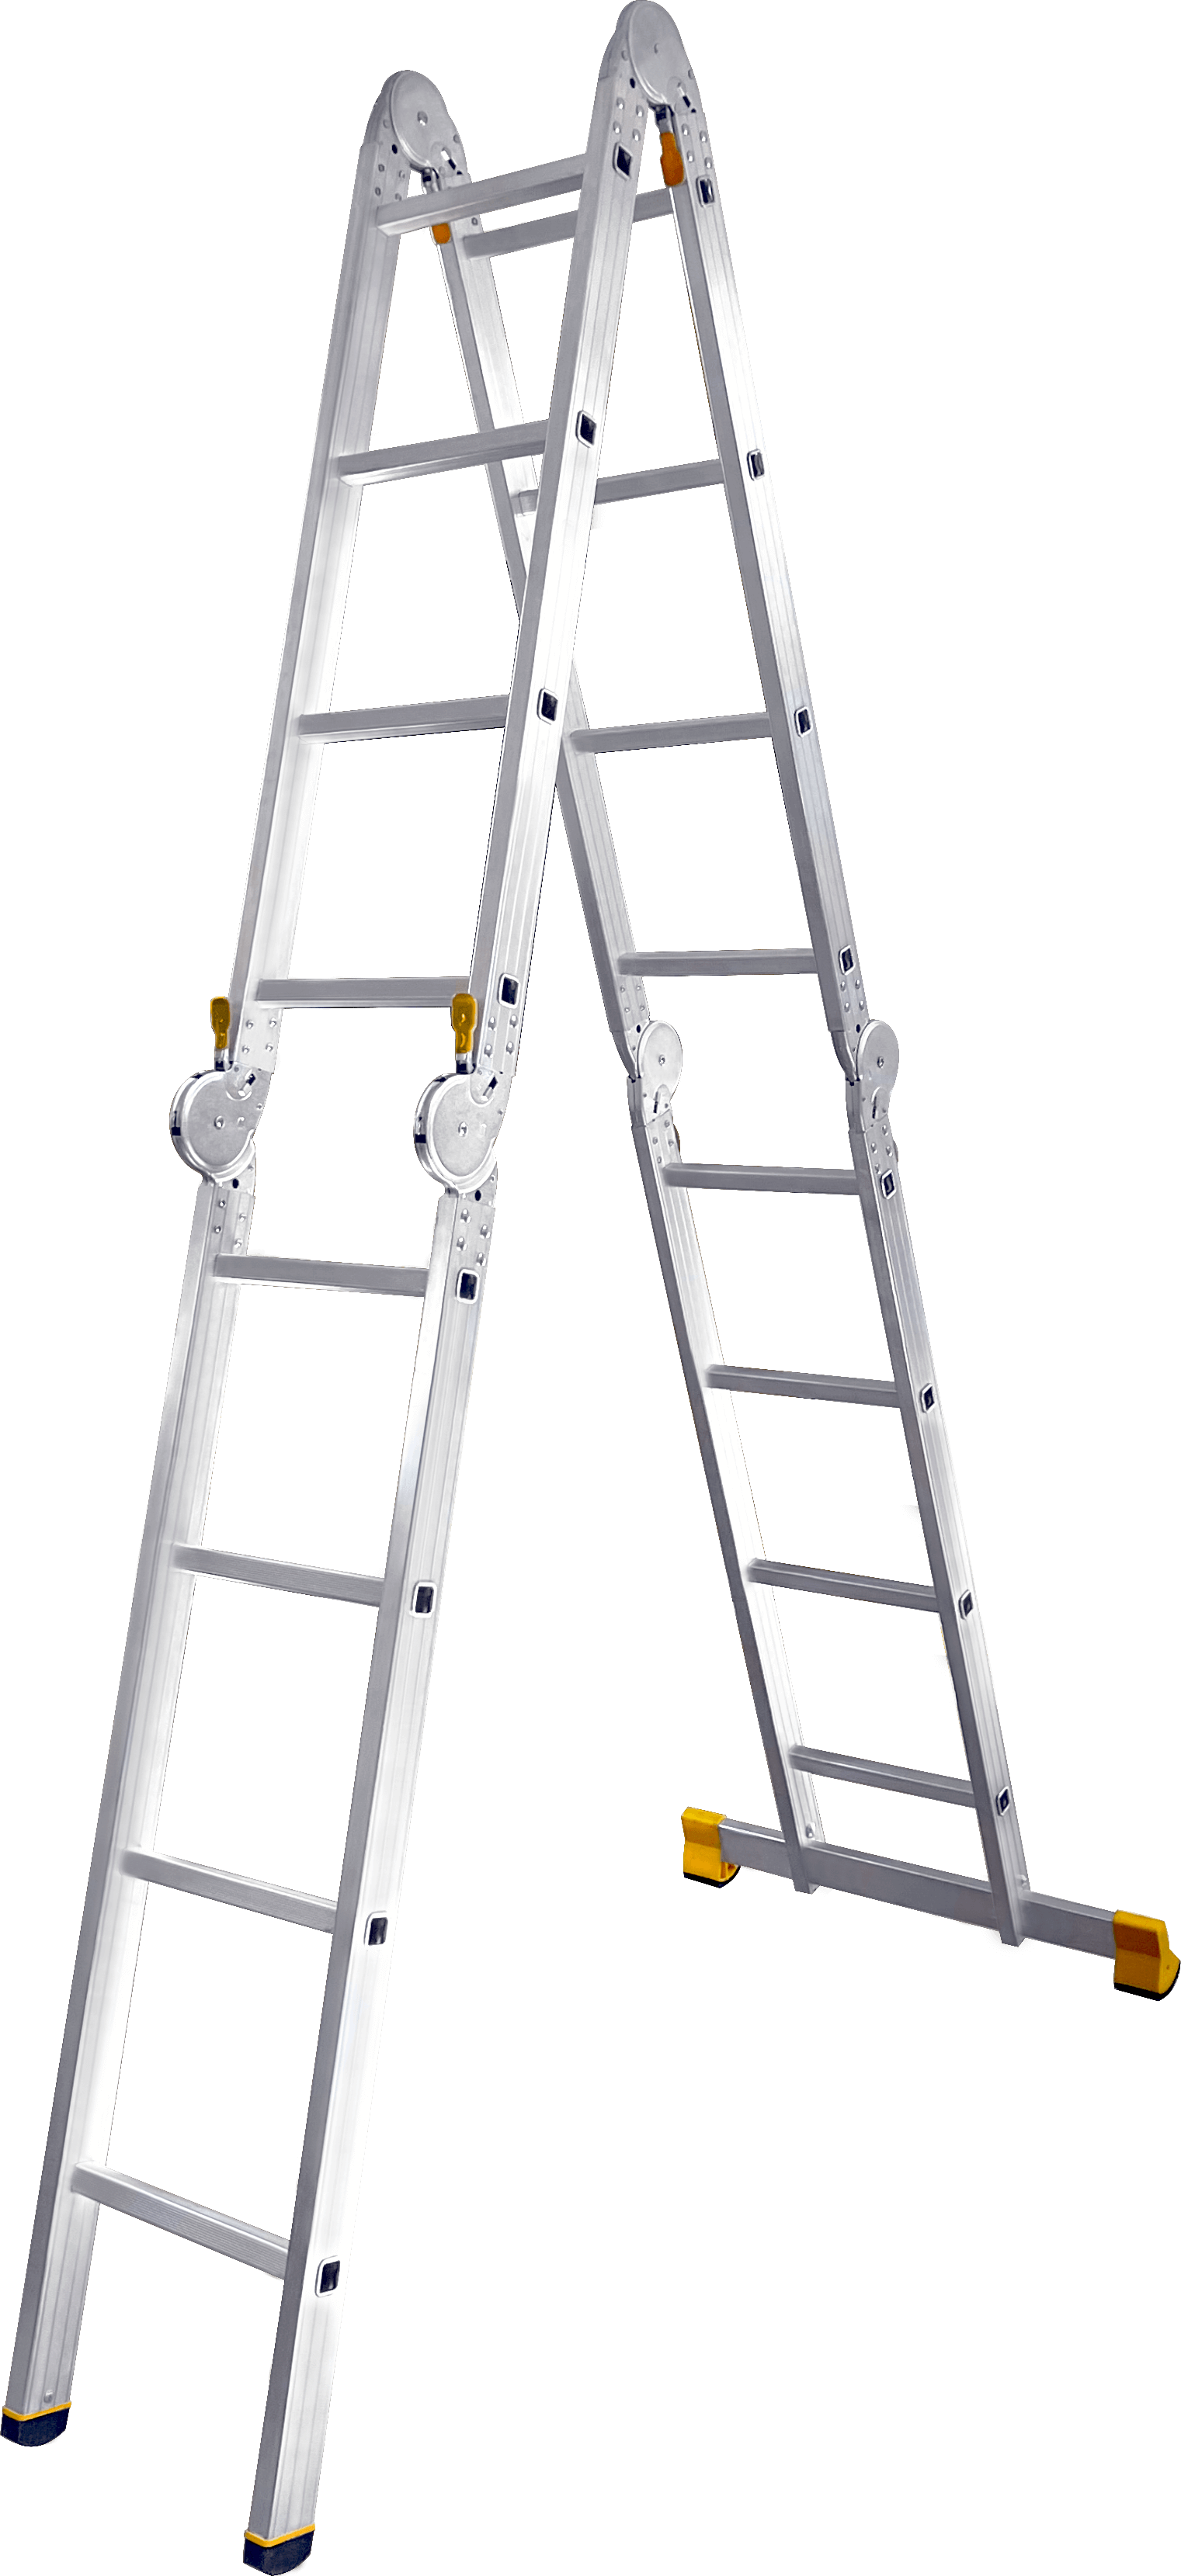 Aluminum Four Section Hinged Multipurpose Ladder (Transformer) 